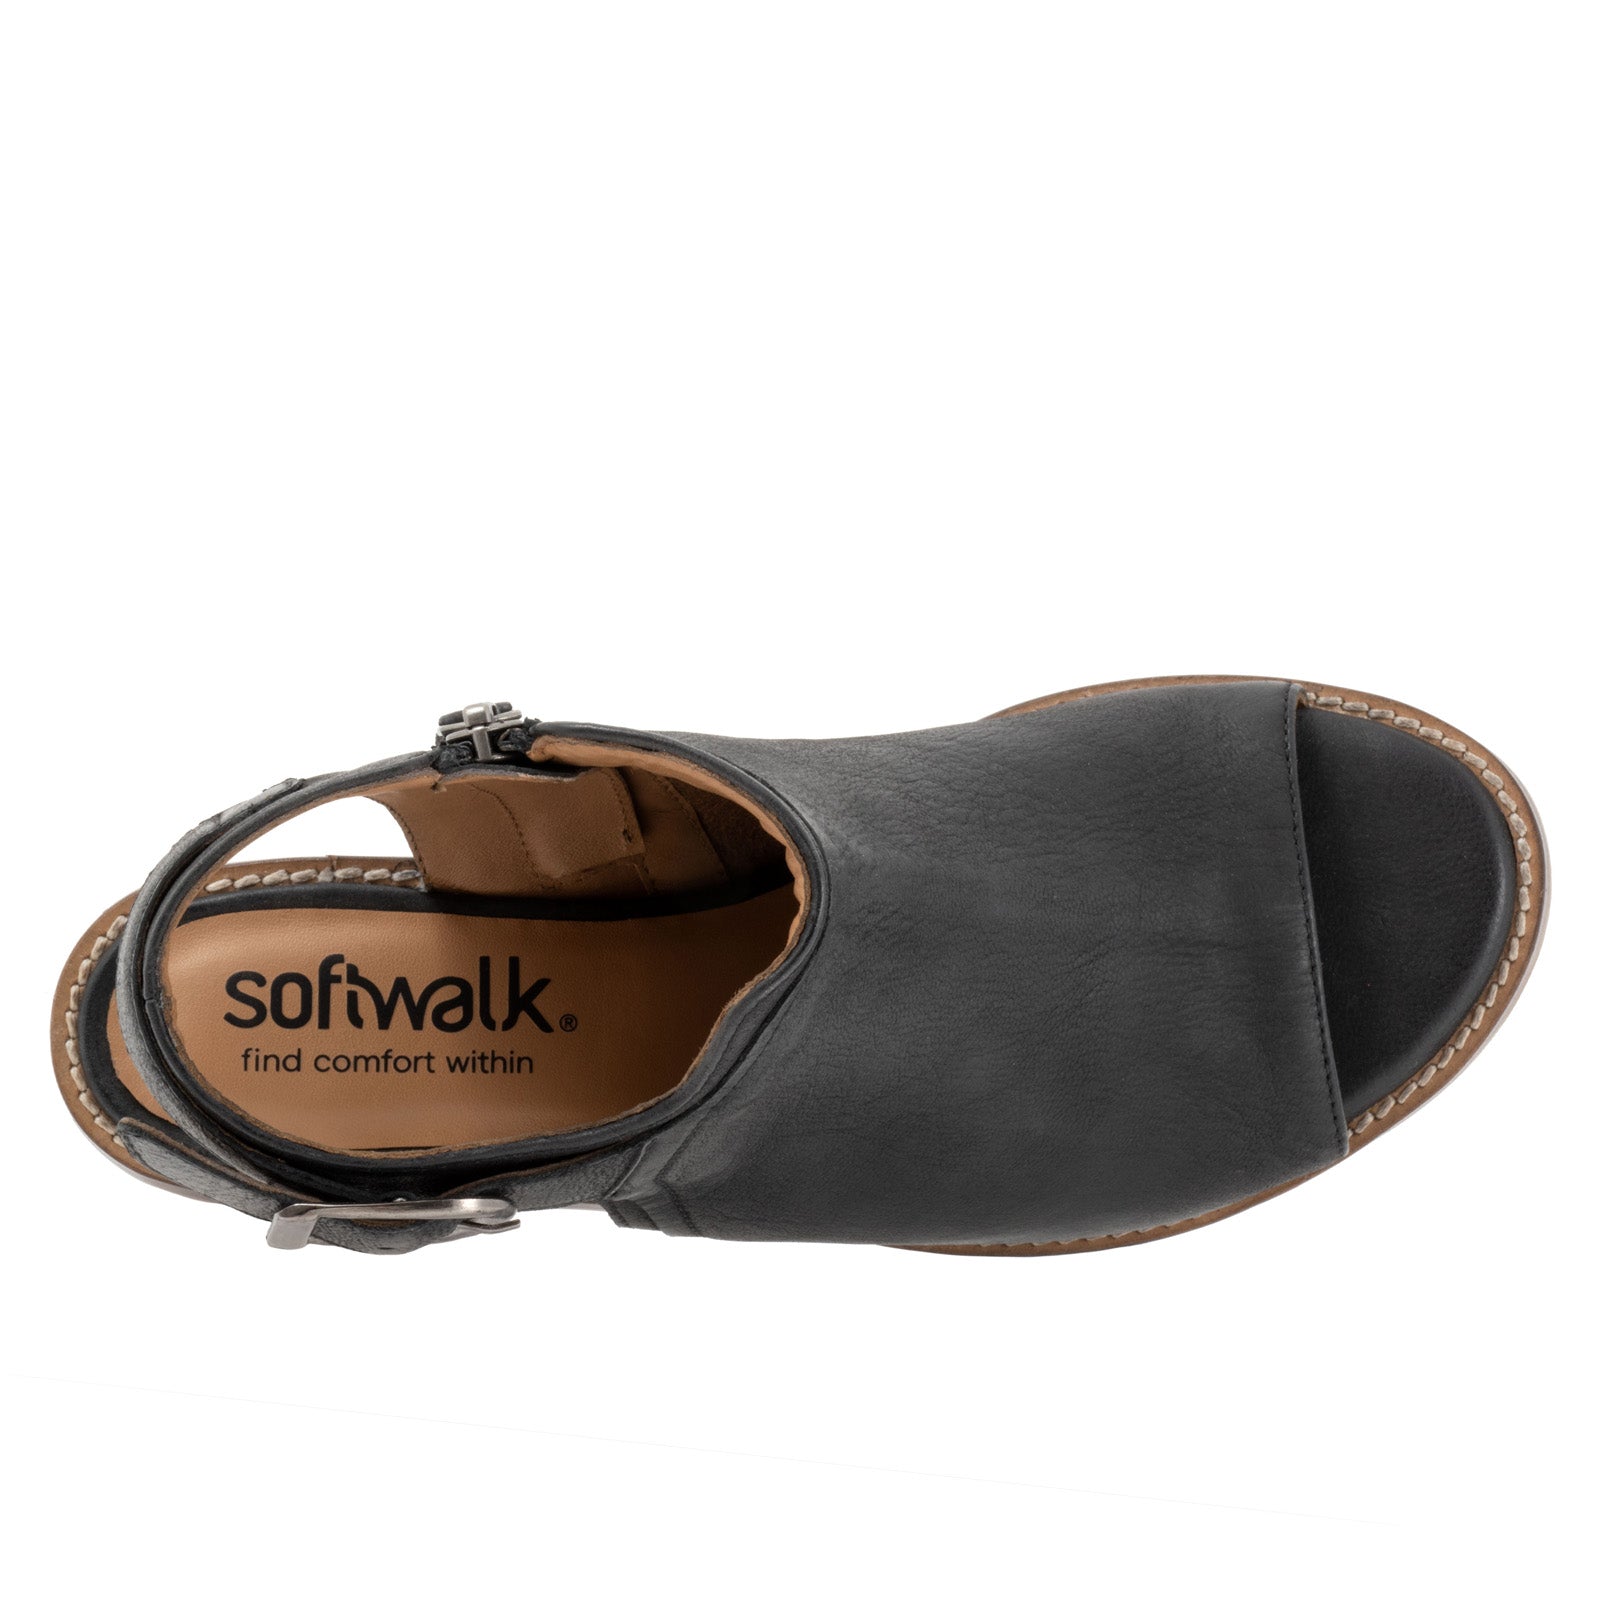 Softwalk Novara S2314-004 Womens Black Narrow Leather Heeled Sandals Boots